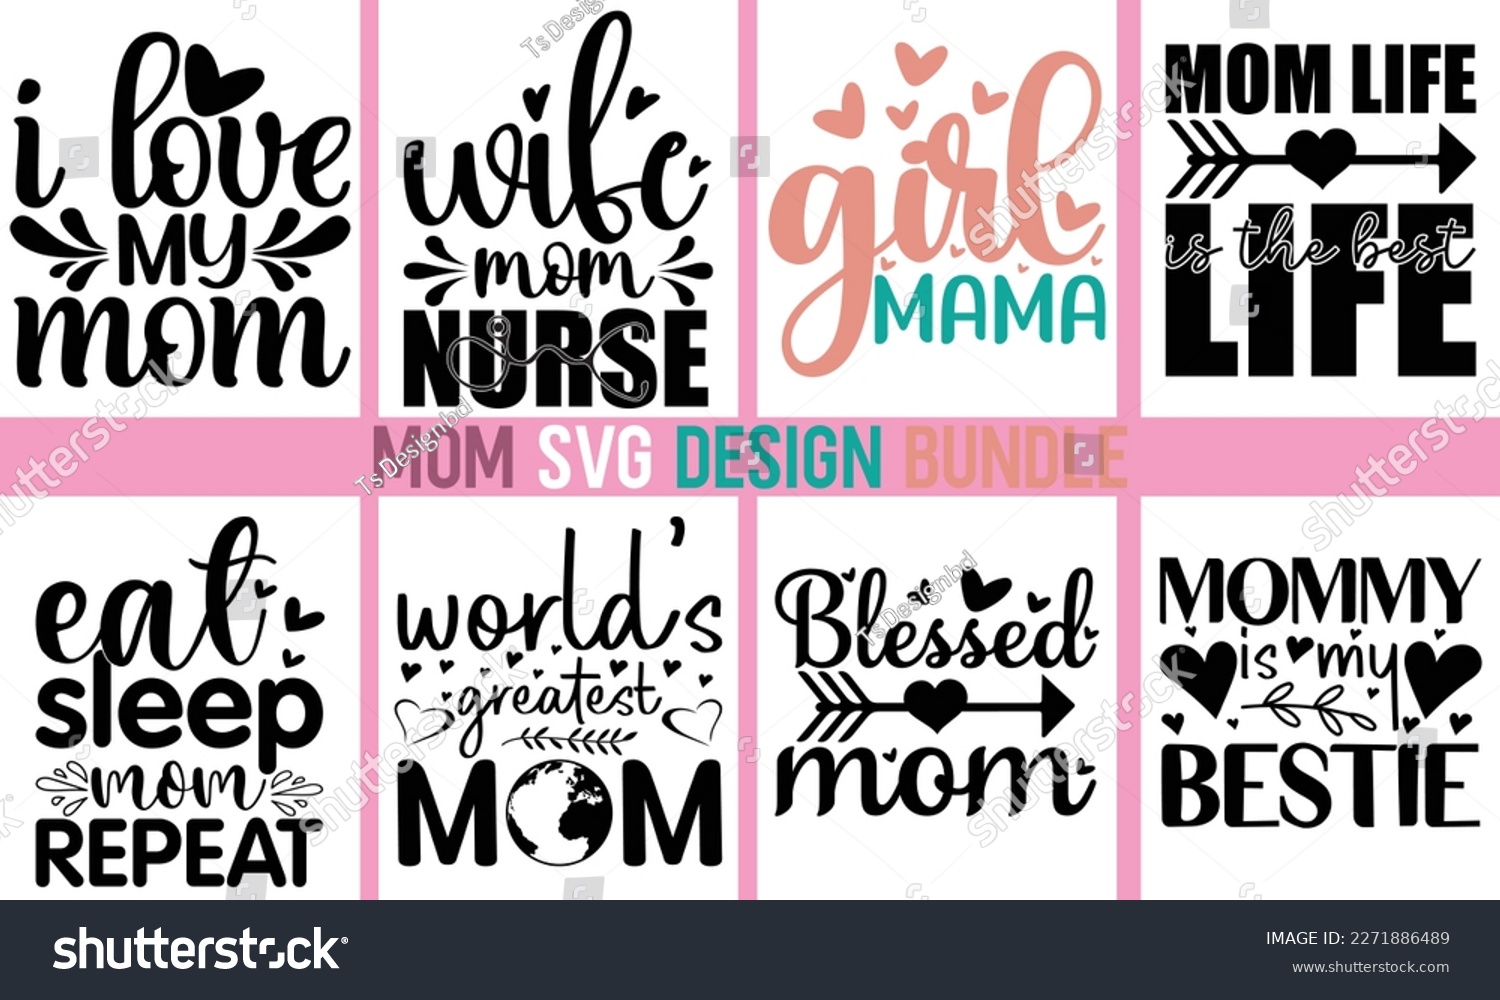 SVG of Mom svg bundle design,Mom Quotes Bundle. Quotes about Mother,Mom svg,Mom svg design,funny mom,Mothers Day Svg,Mother's day typographic t shirt design, Mom Life Svg, svg